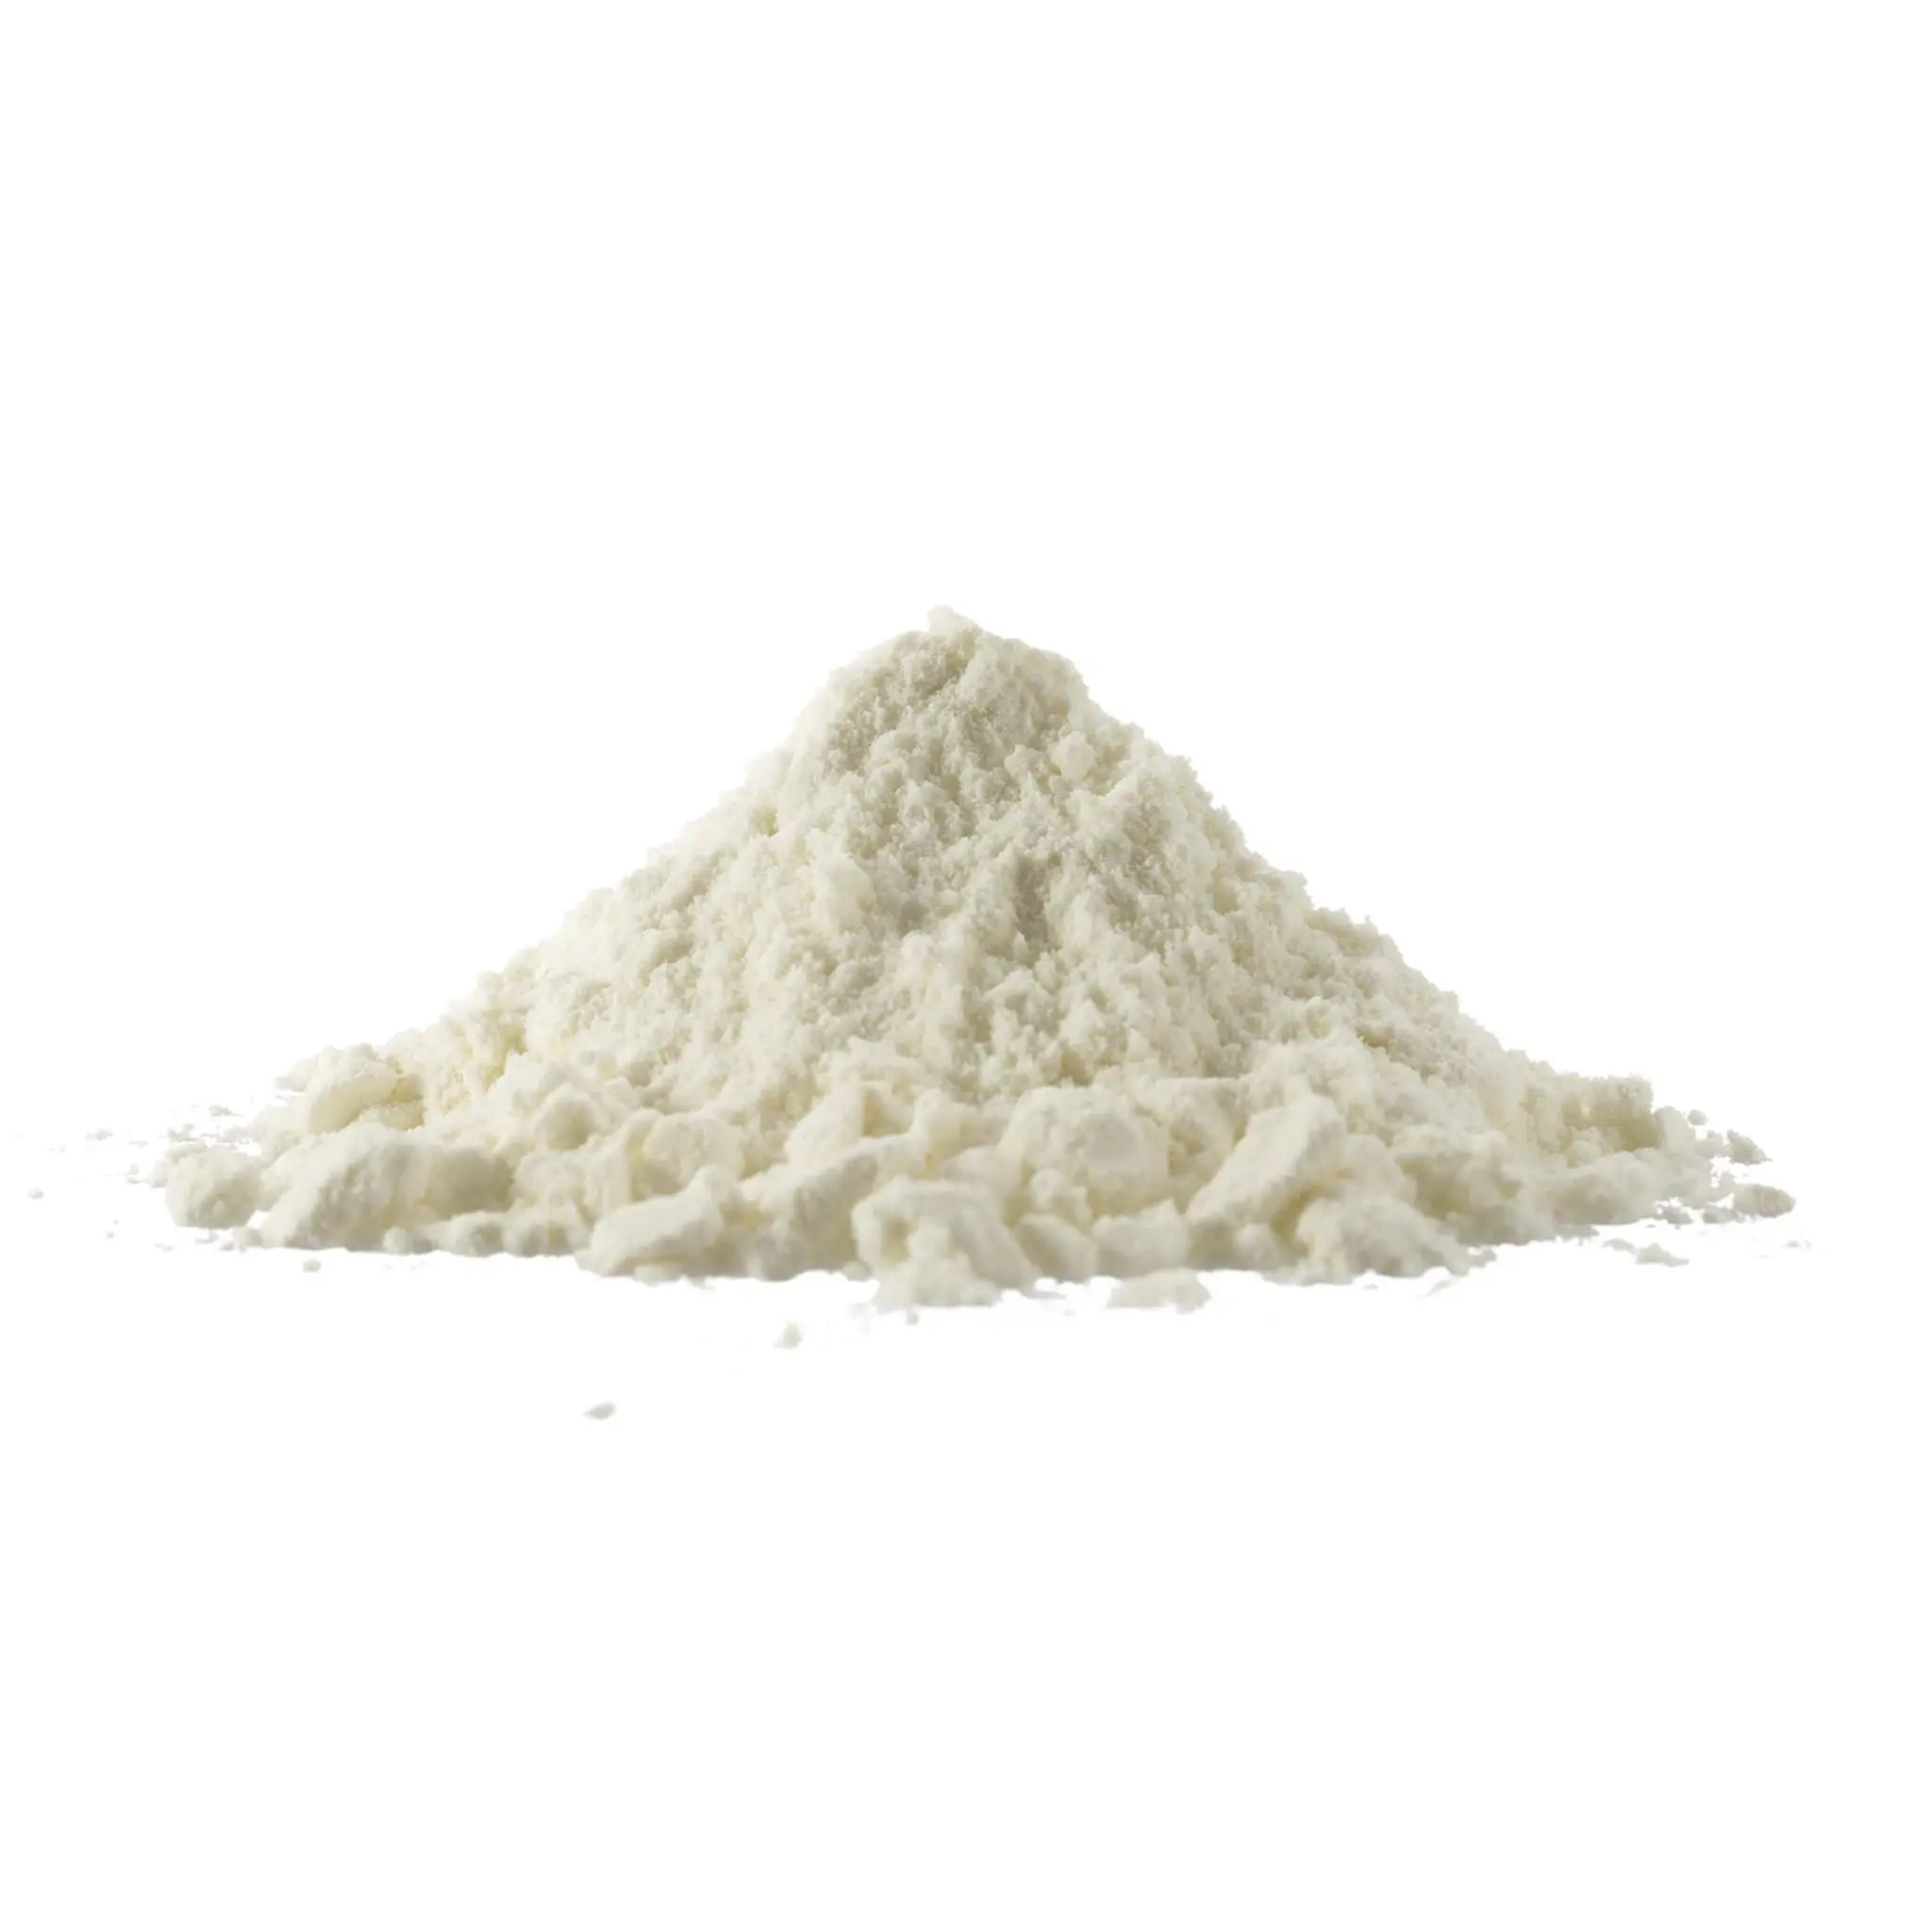 Skimmed Milk Nutrition Powder The Best Skimmed milk Powder Skimmed Milk Powder For Children and Adults